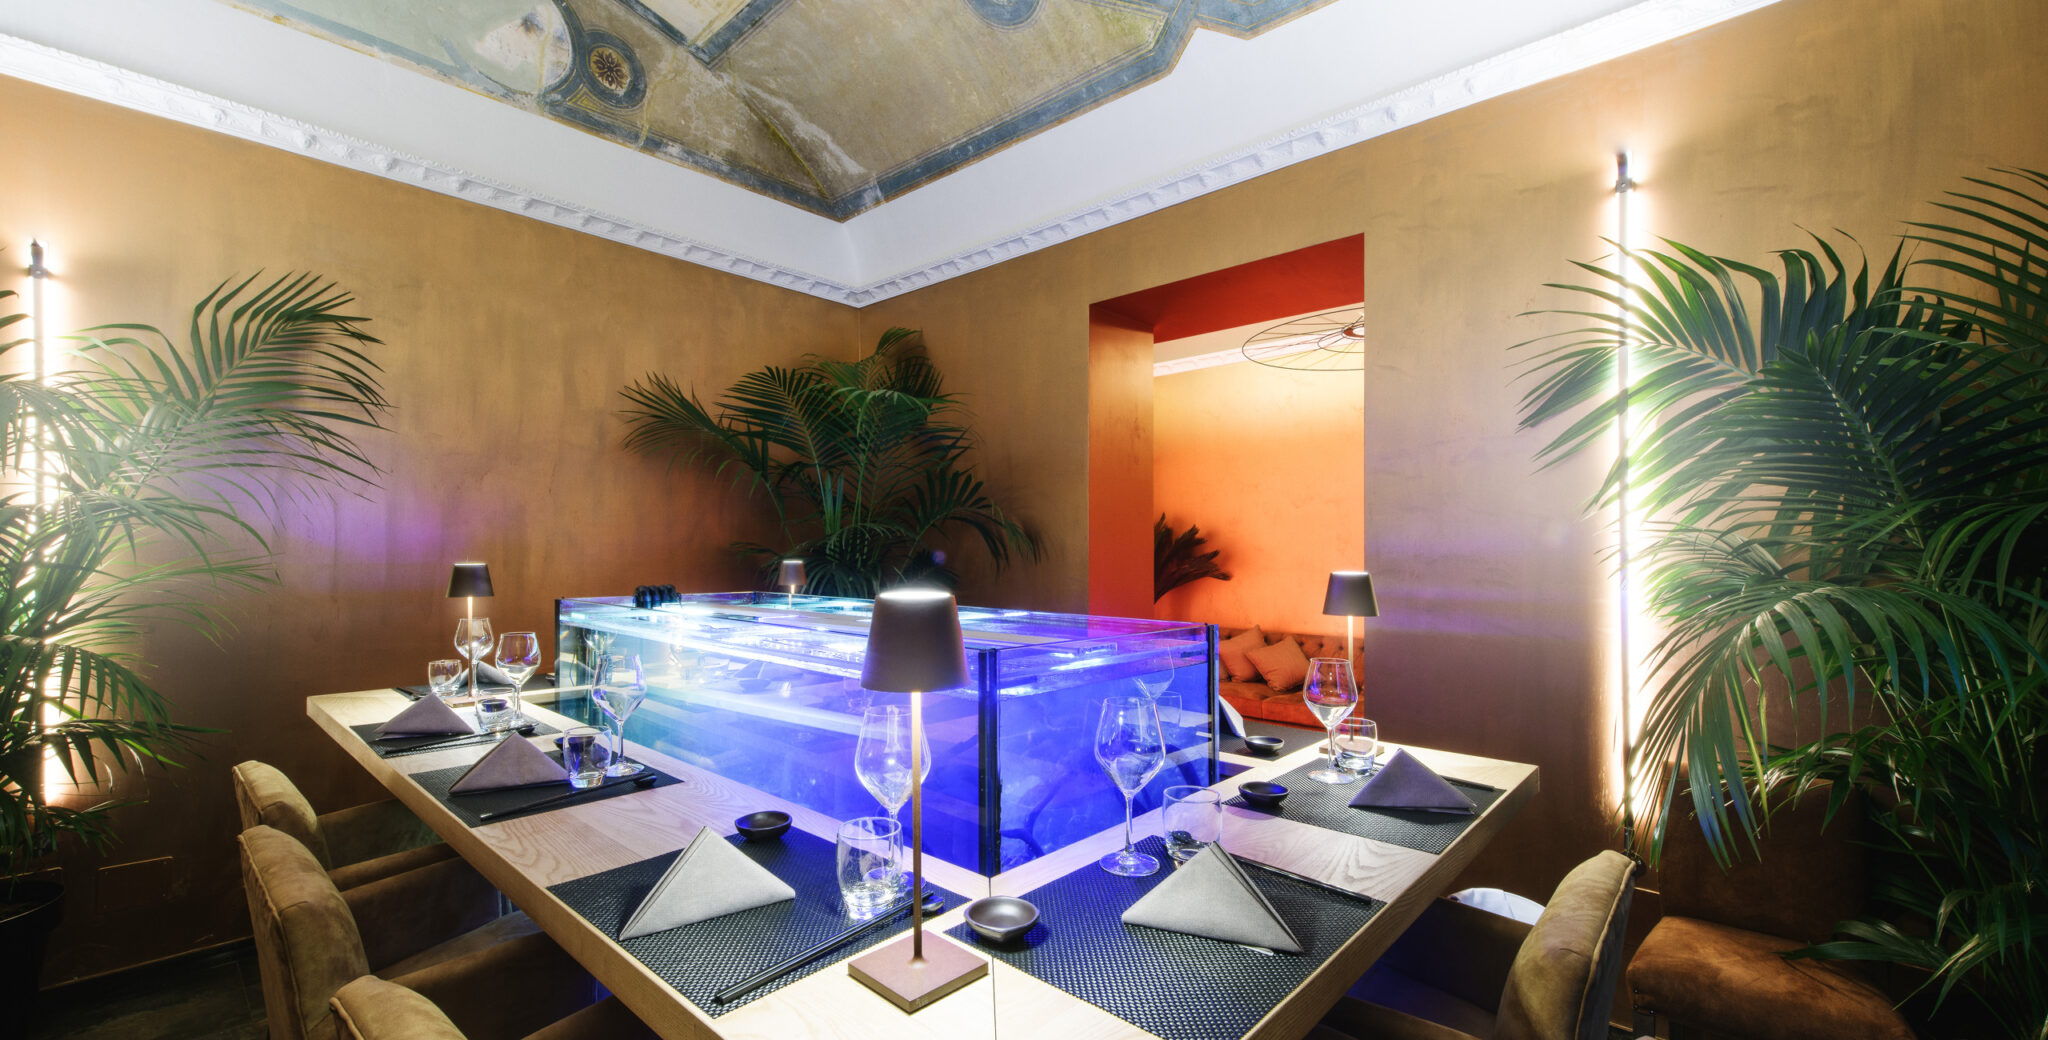 Acquario Restaurant | Sushi • Commerical • Interior Photography • Still life • Brand Identiy | STAYFRESH studio • Roberto Di Fresco